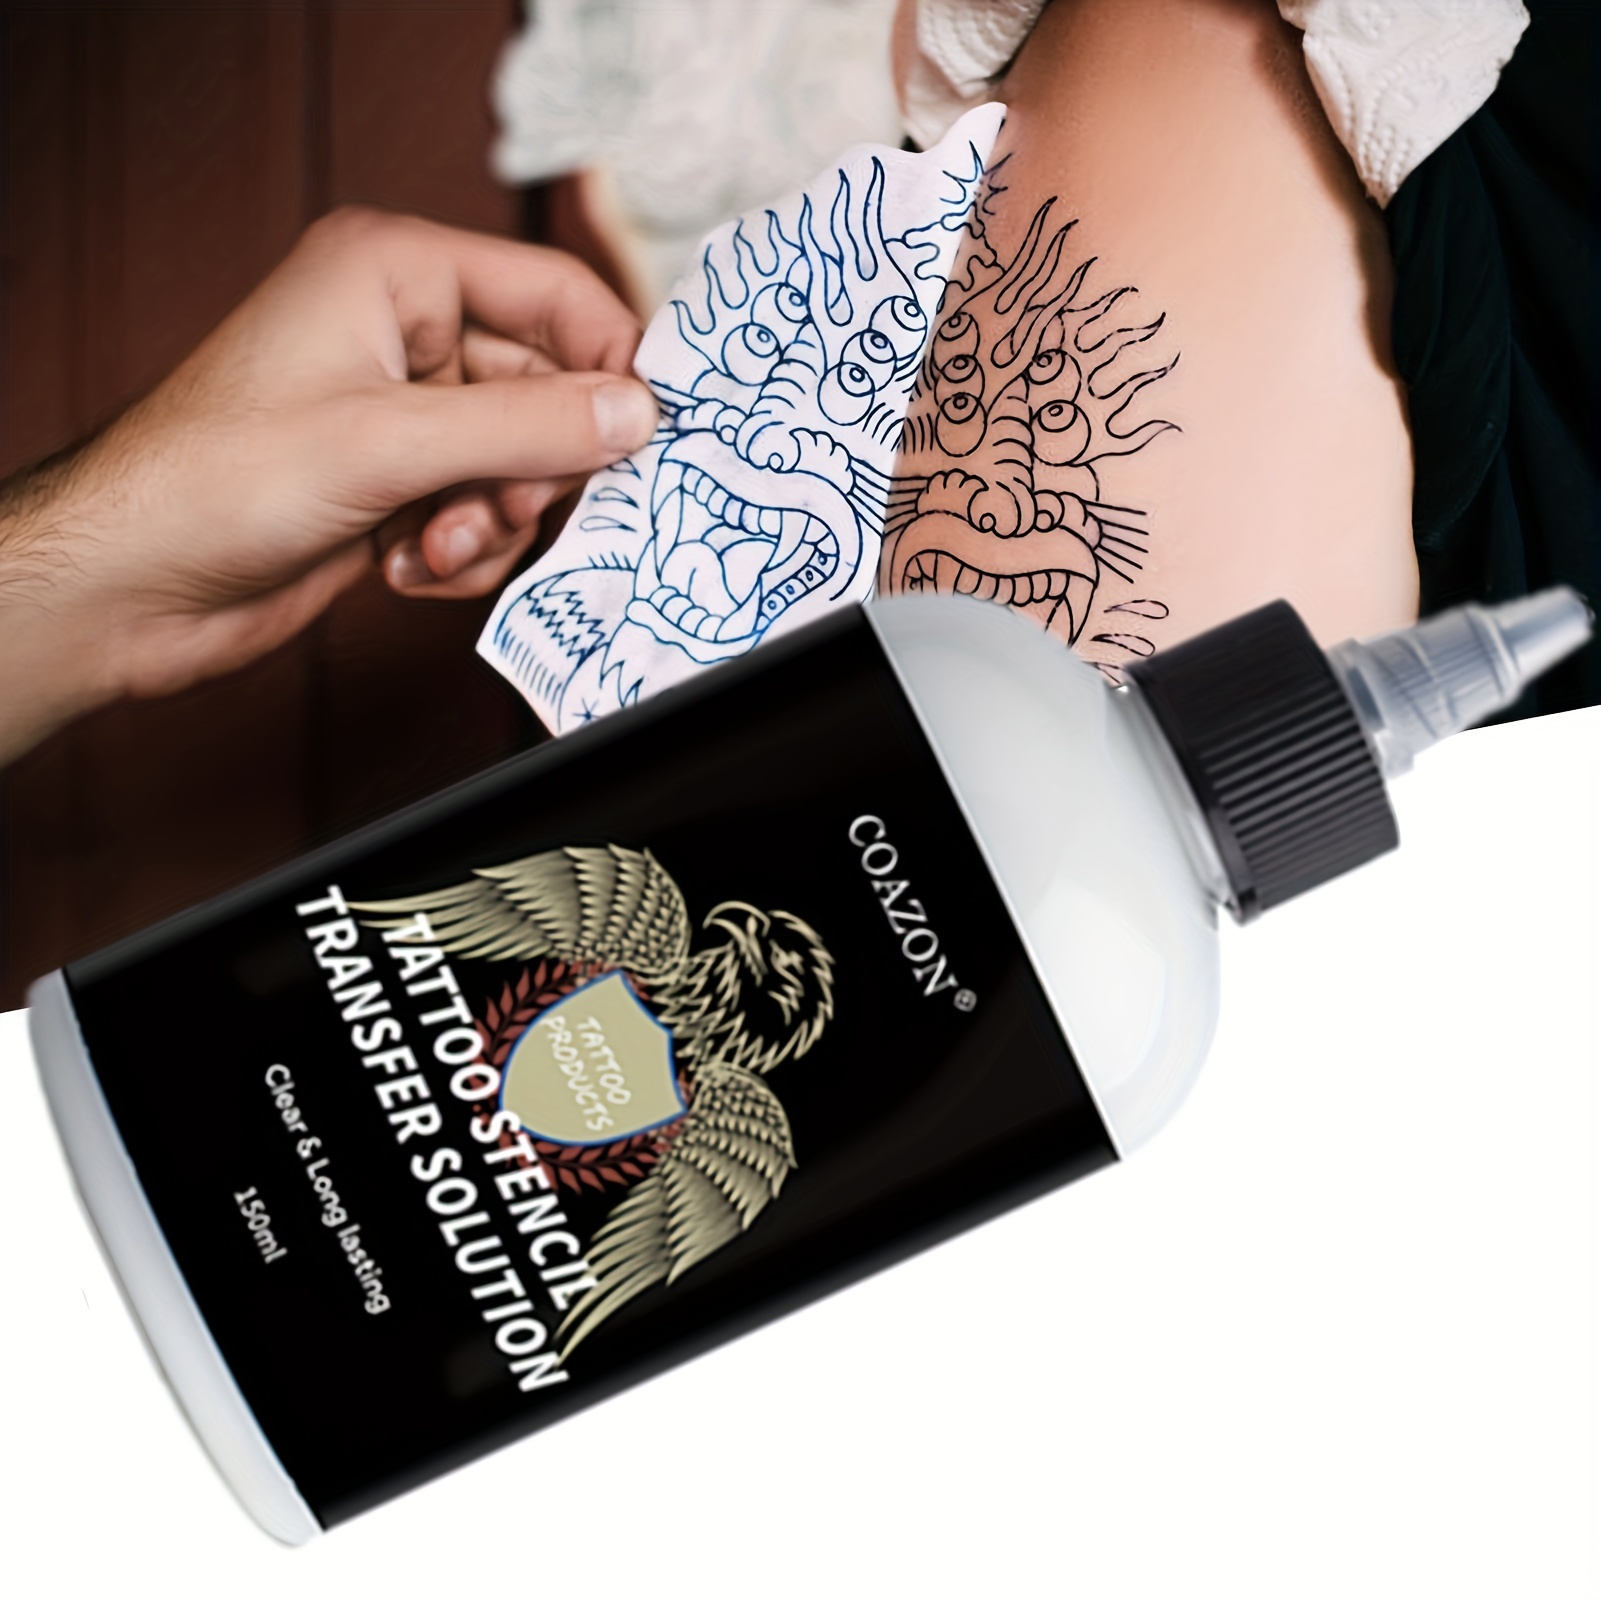 Tattoo Transfer Cream Gel Skin Solution Professional Tattoo Transfer Soap  Stencil Tattoo Supplies